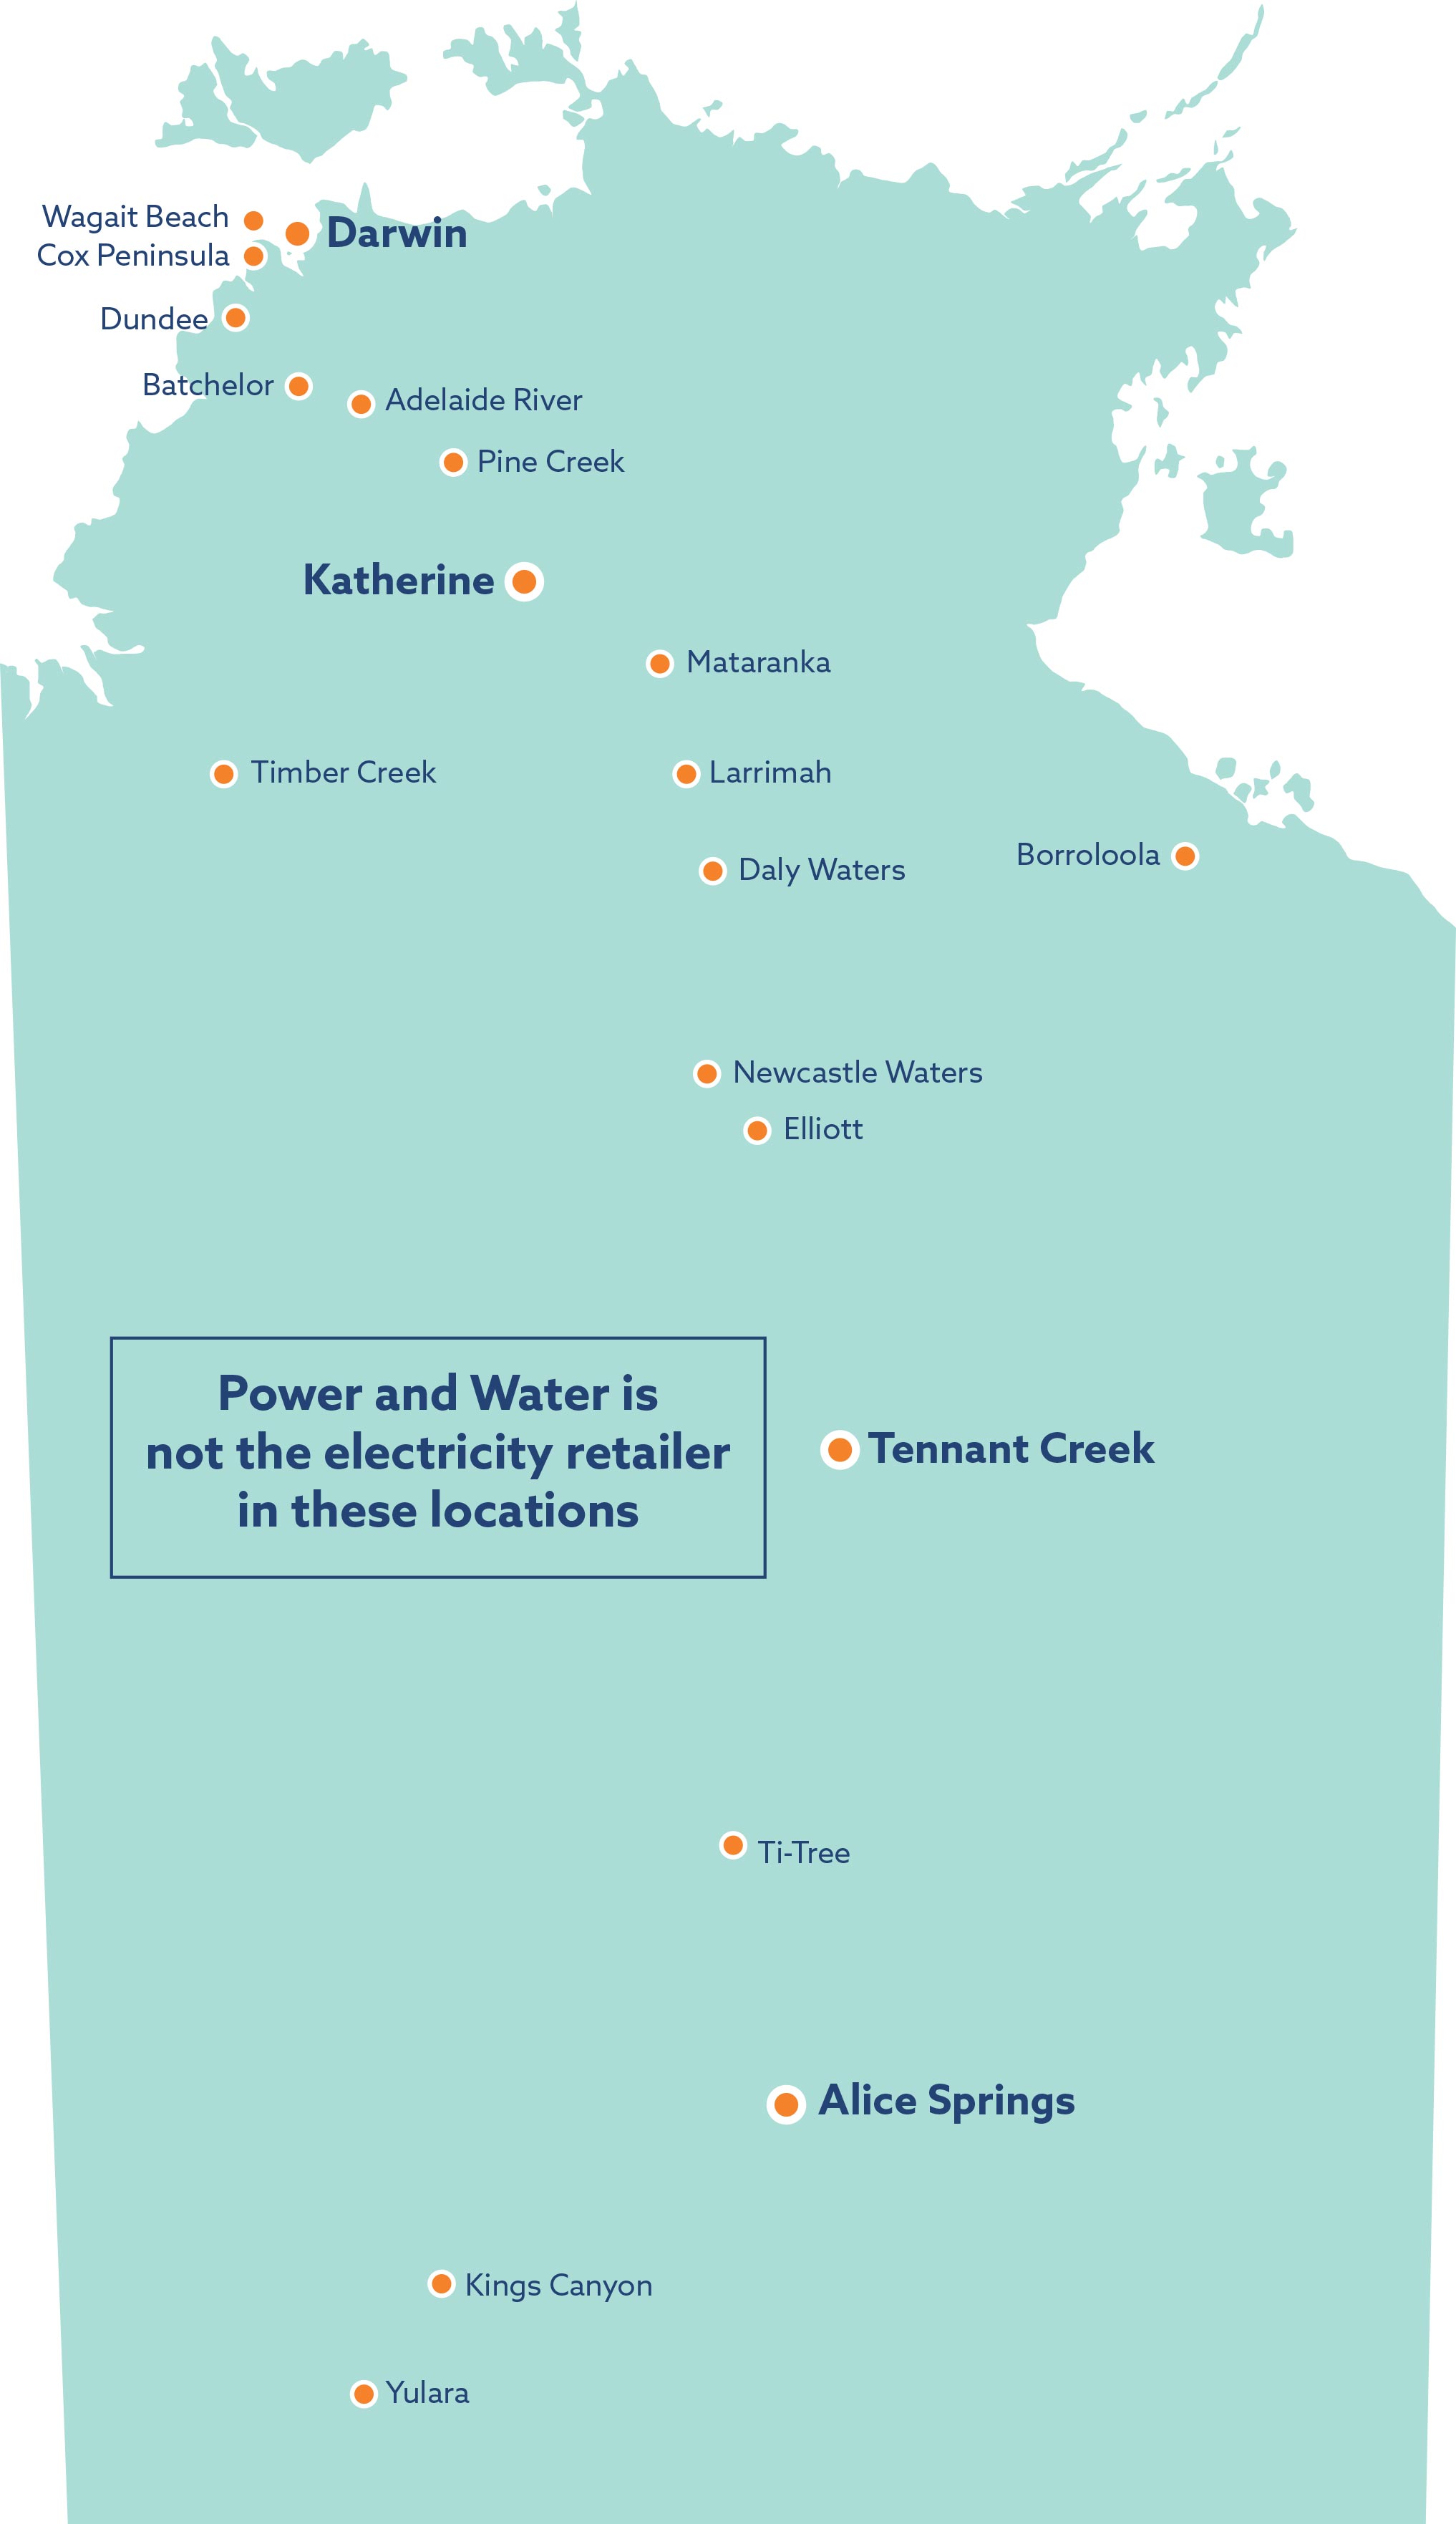 Power Water's Image Map as a non electricity retailer 